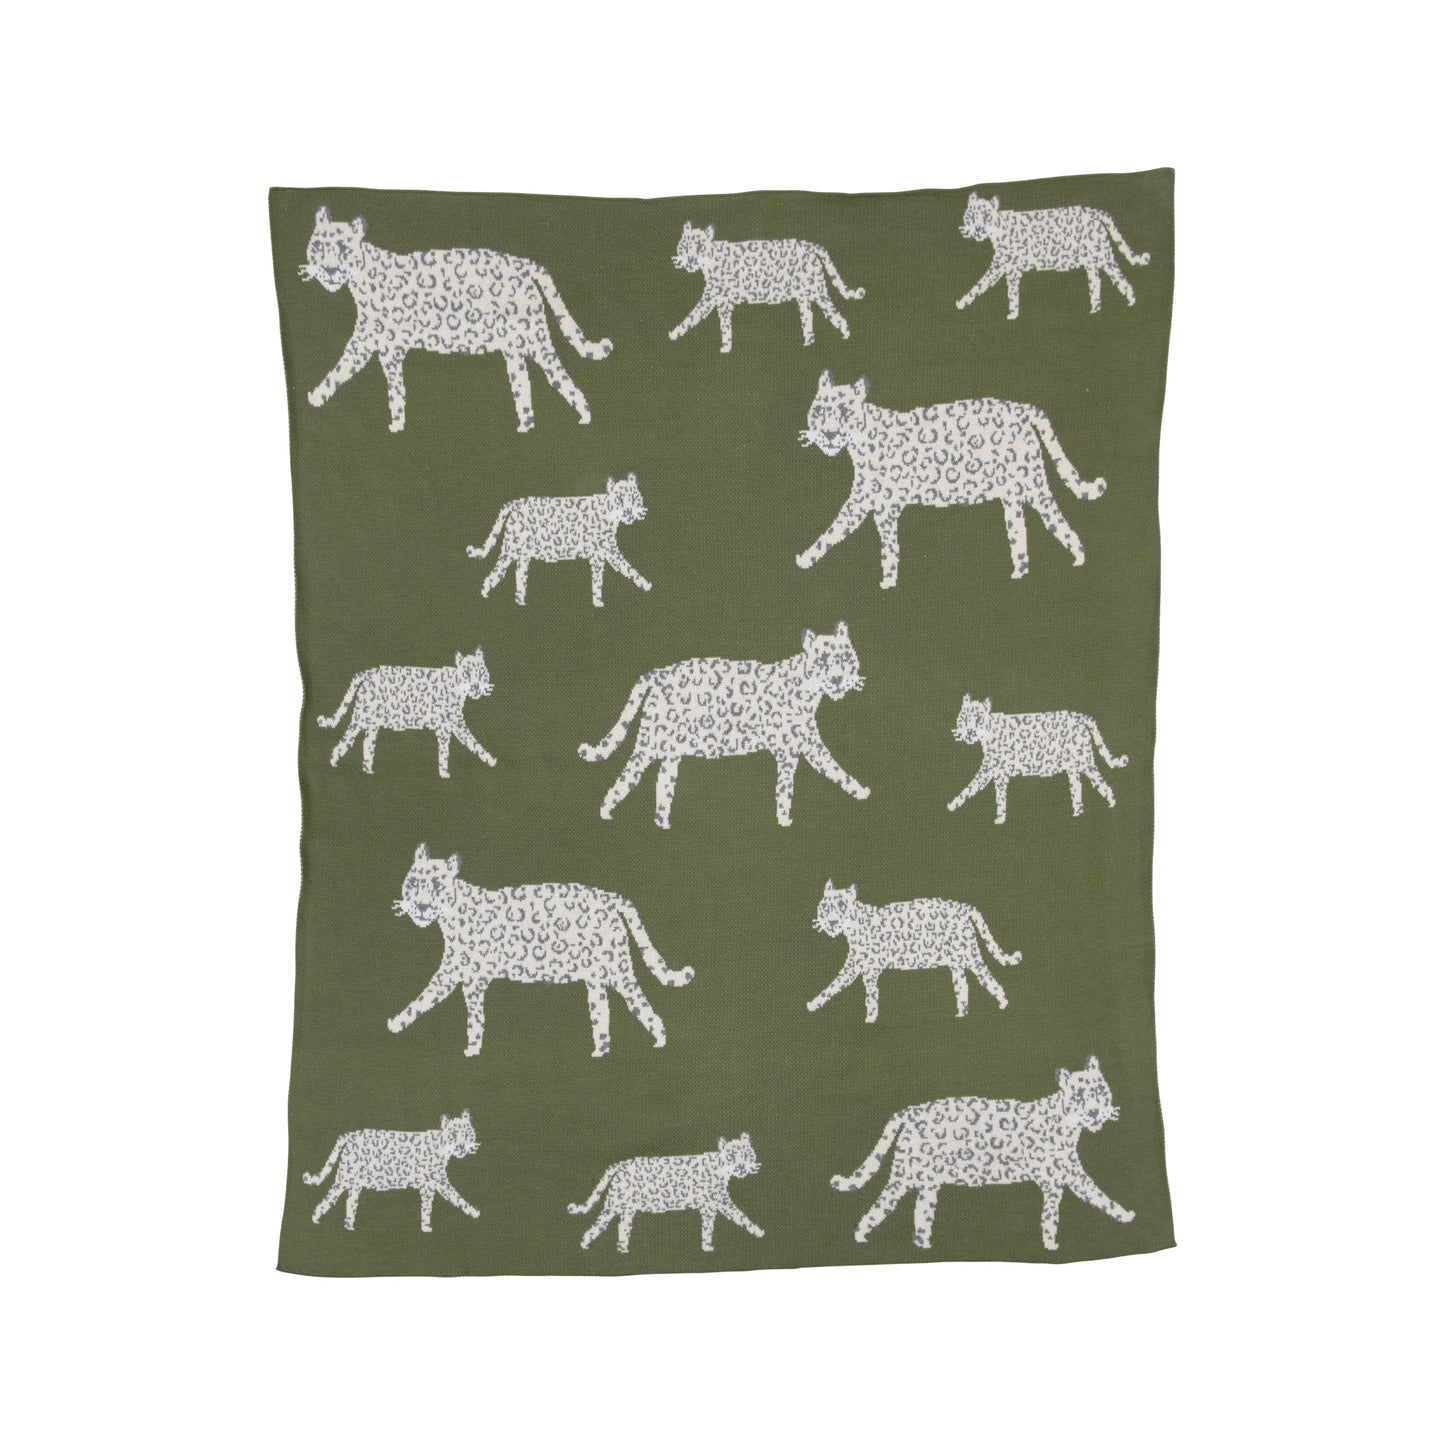 Cotton Knit Baby Blanket - Jaguars